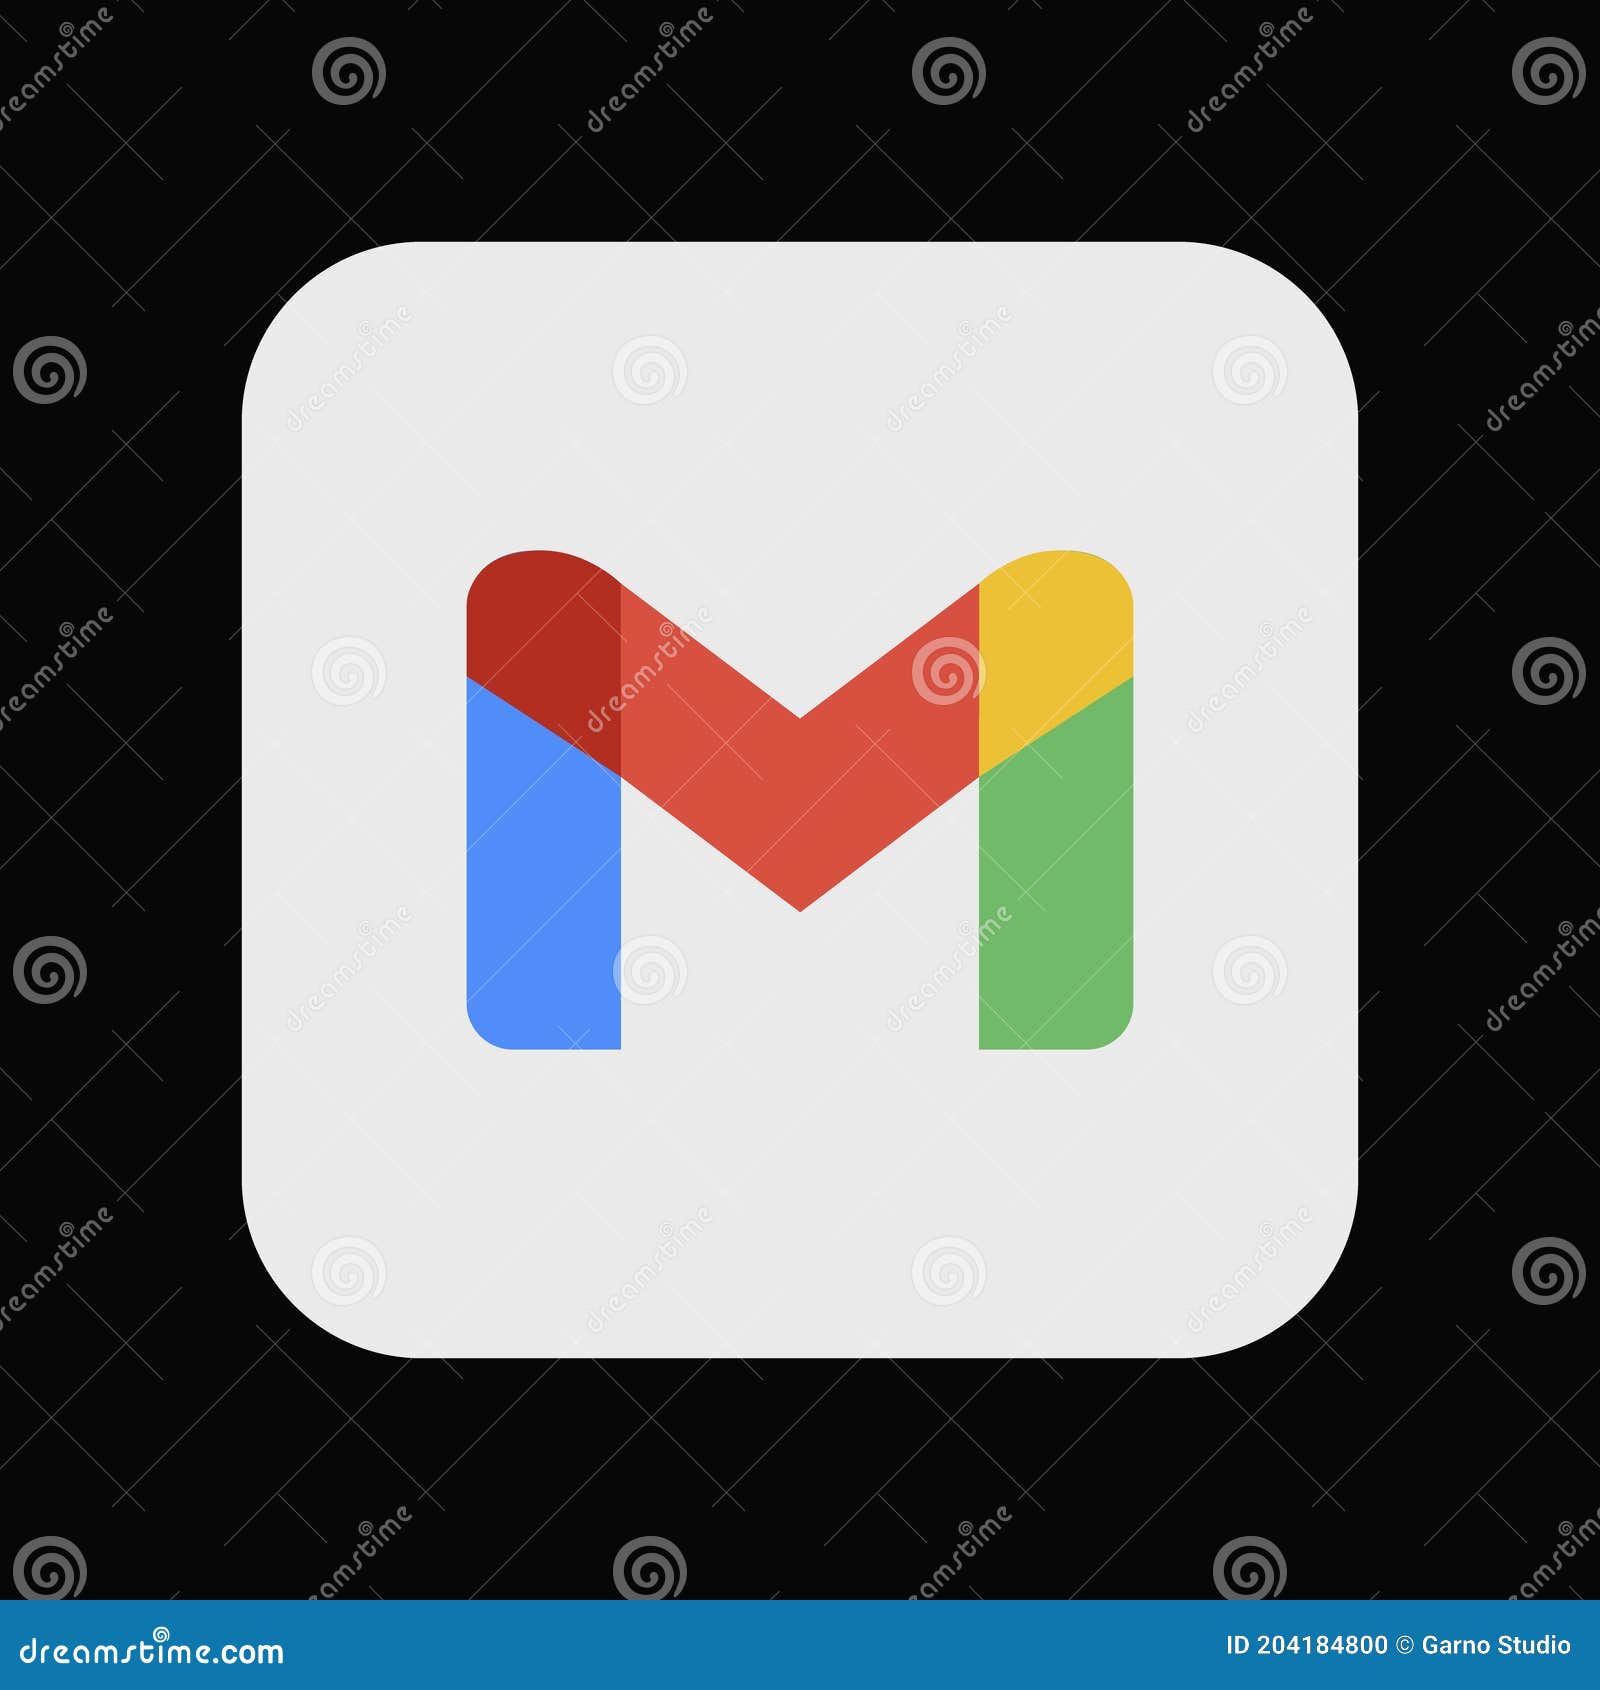 Gmail Logo App Icon Editorial Image Illustration Of Logo 204184800